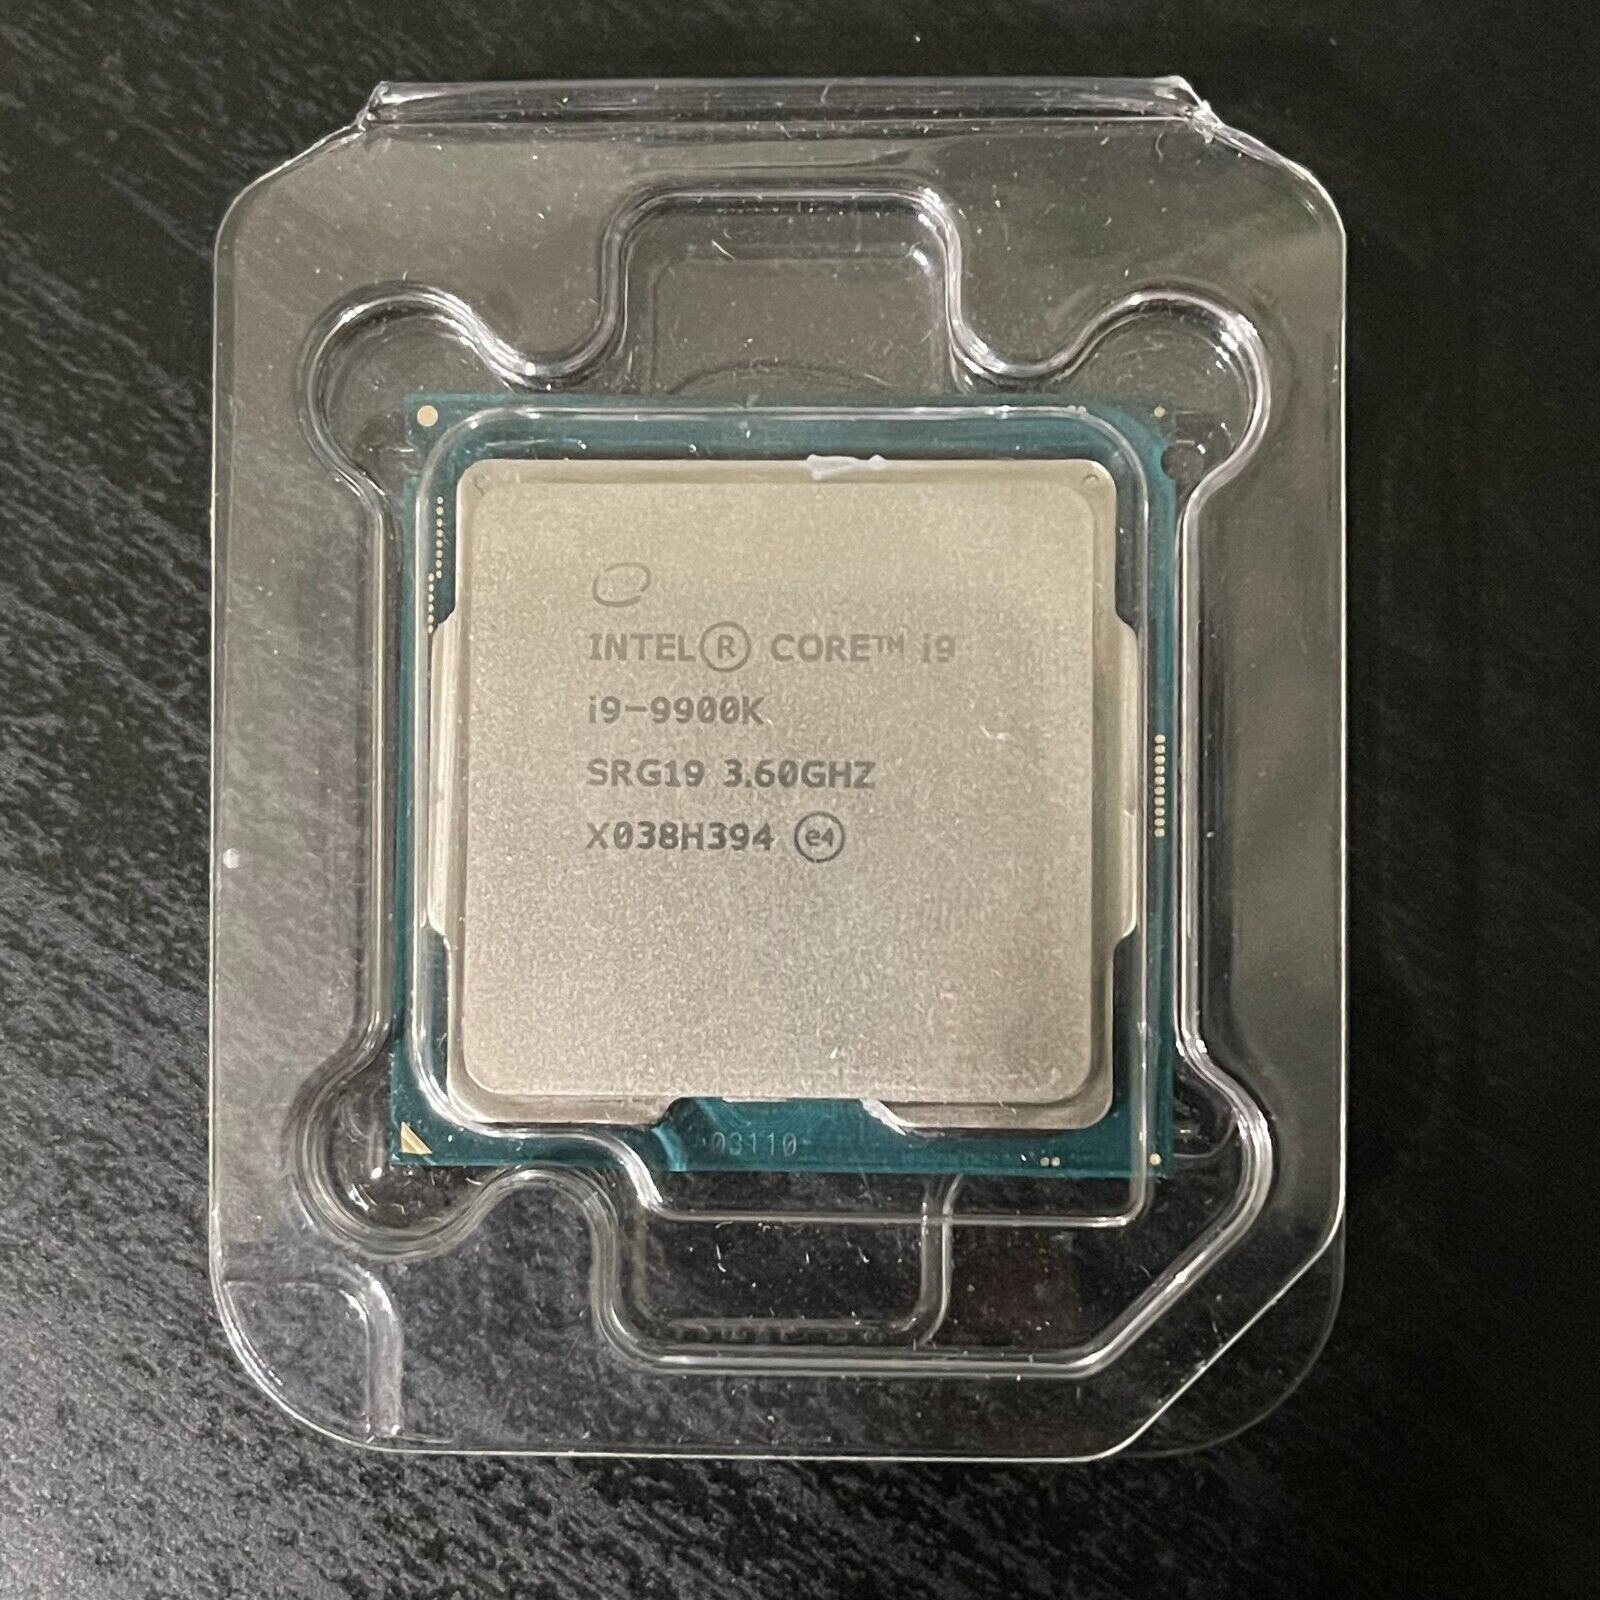 Intel Core i9-9900K 3.6GHz 8-Core Processor (BX806849900K) for 